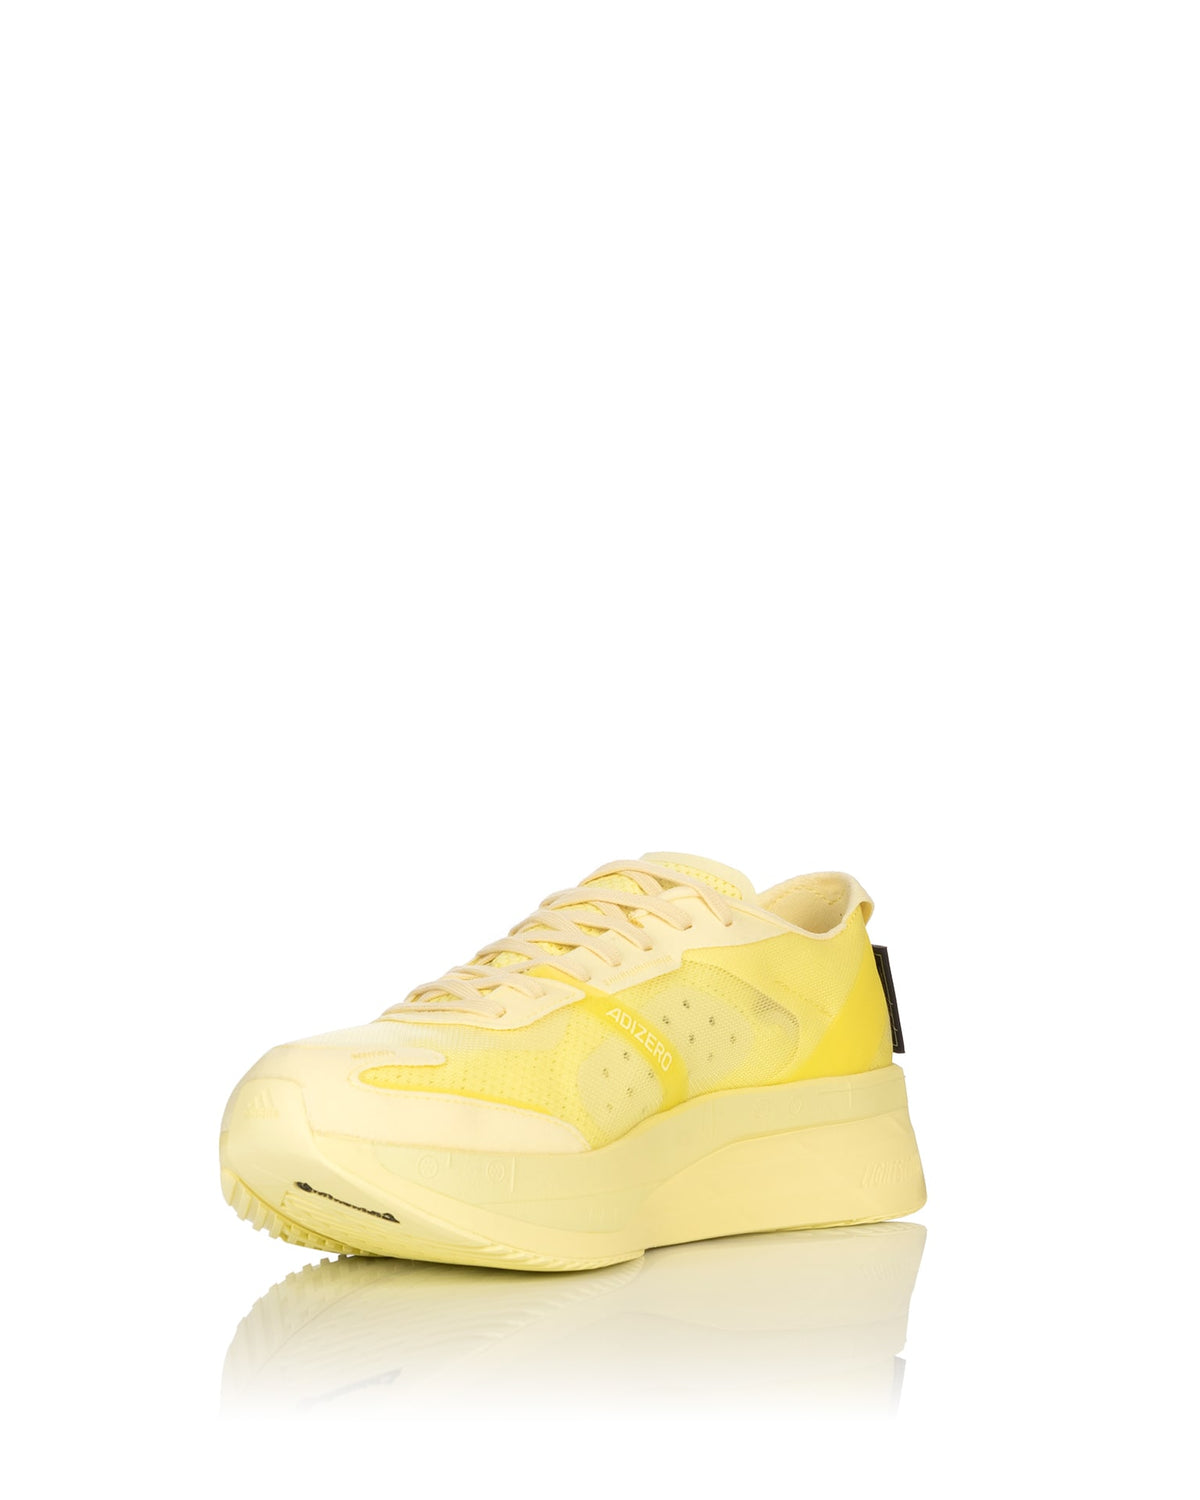 adidas Y-3 | Boston 11 Blush Yellow - ID8007 - Concrete